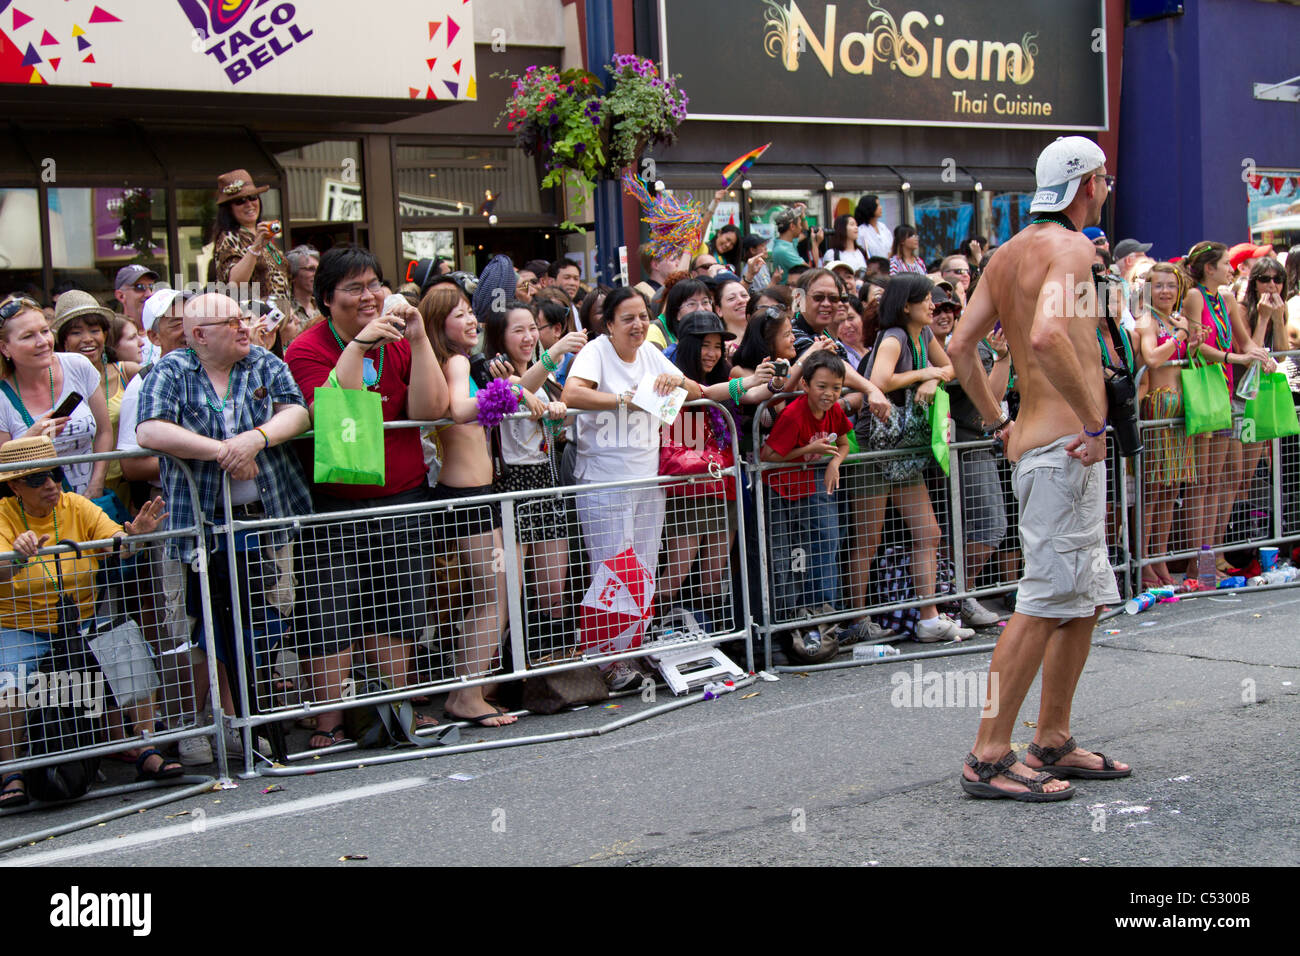 Man Flashing Crowd Women Exicted Stock Photo Alamy